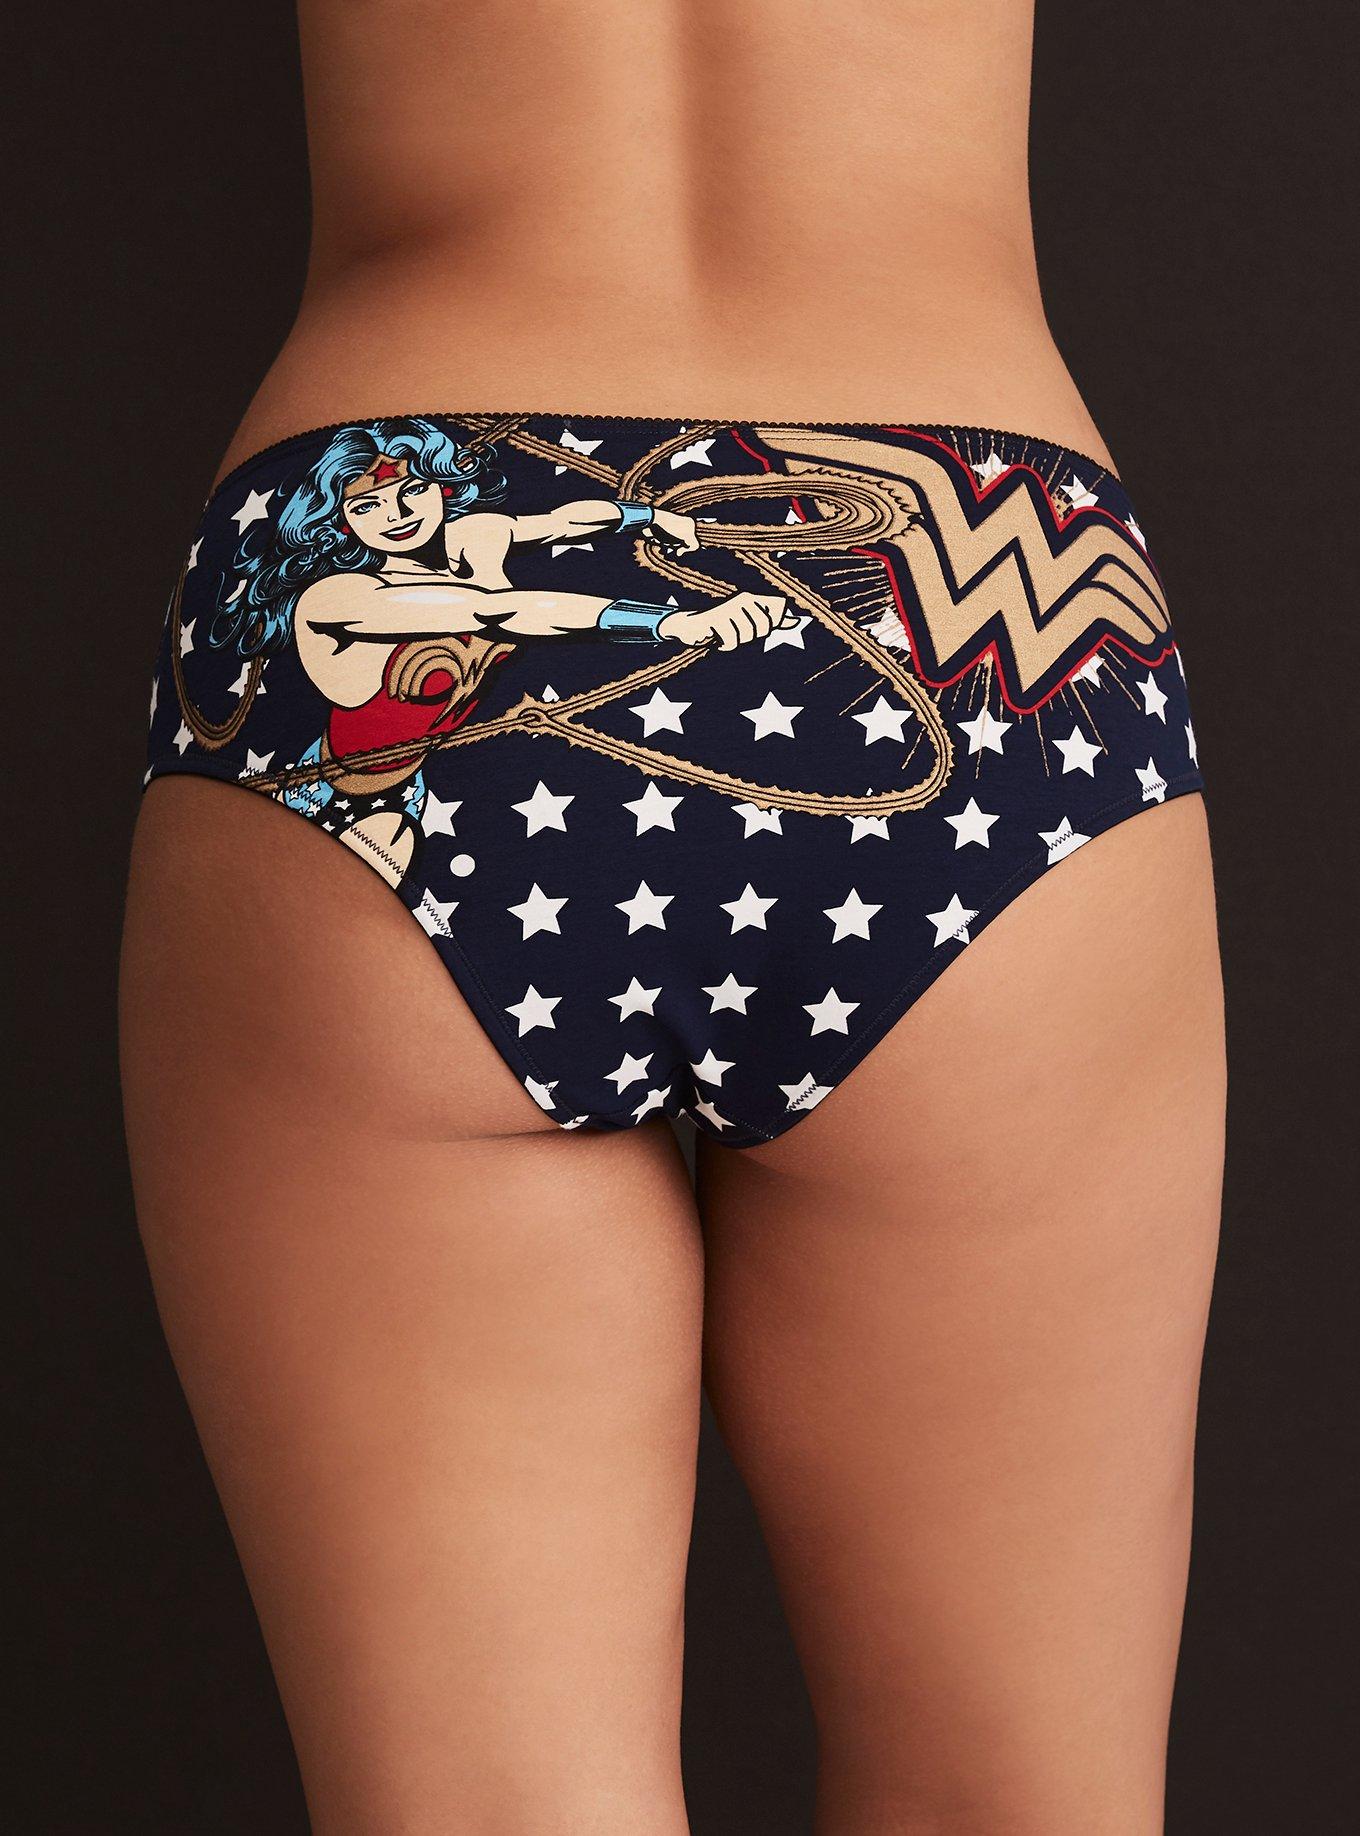 Plus Size - Wonder Woman Cotton Hipster Panty - Torrid